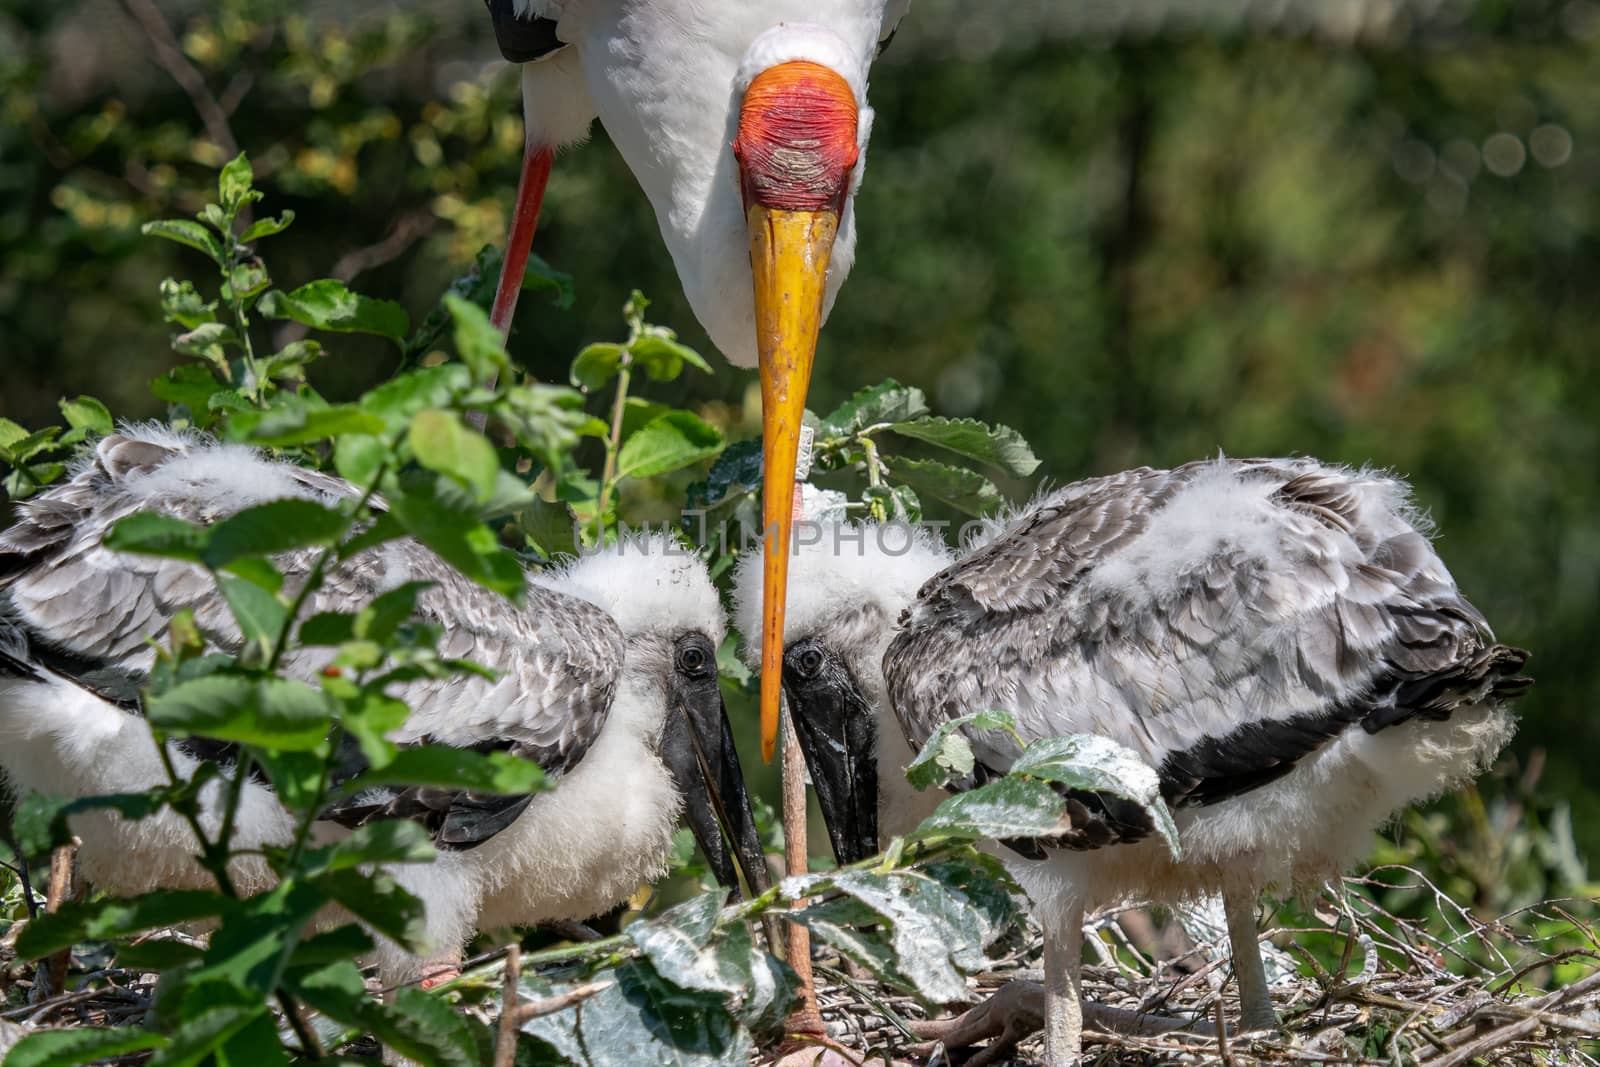 White stork (mycteria cinerea) feeding chicks. Bird's nest. Family mycteria cinerea in the nest.